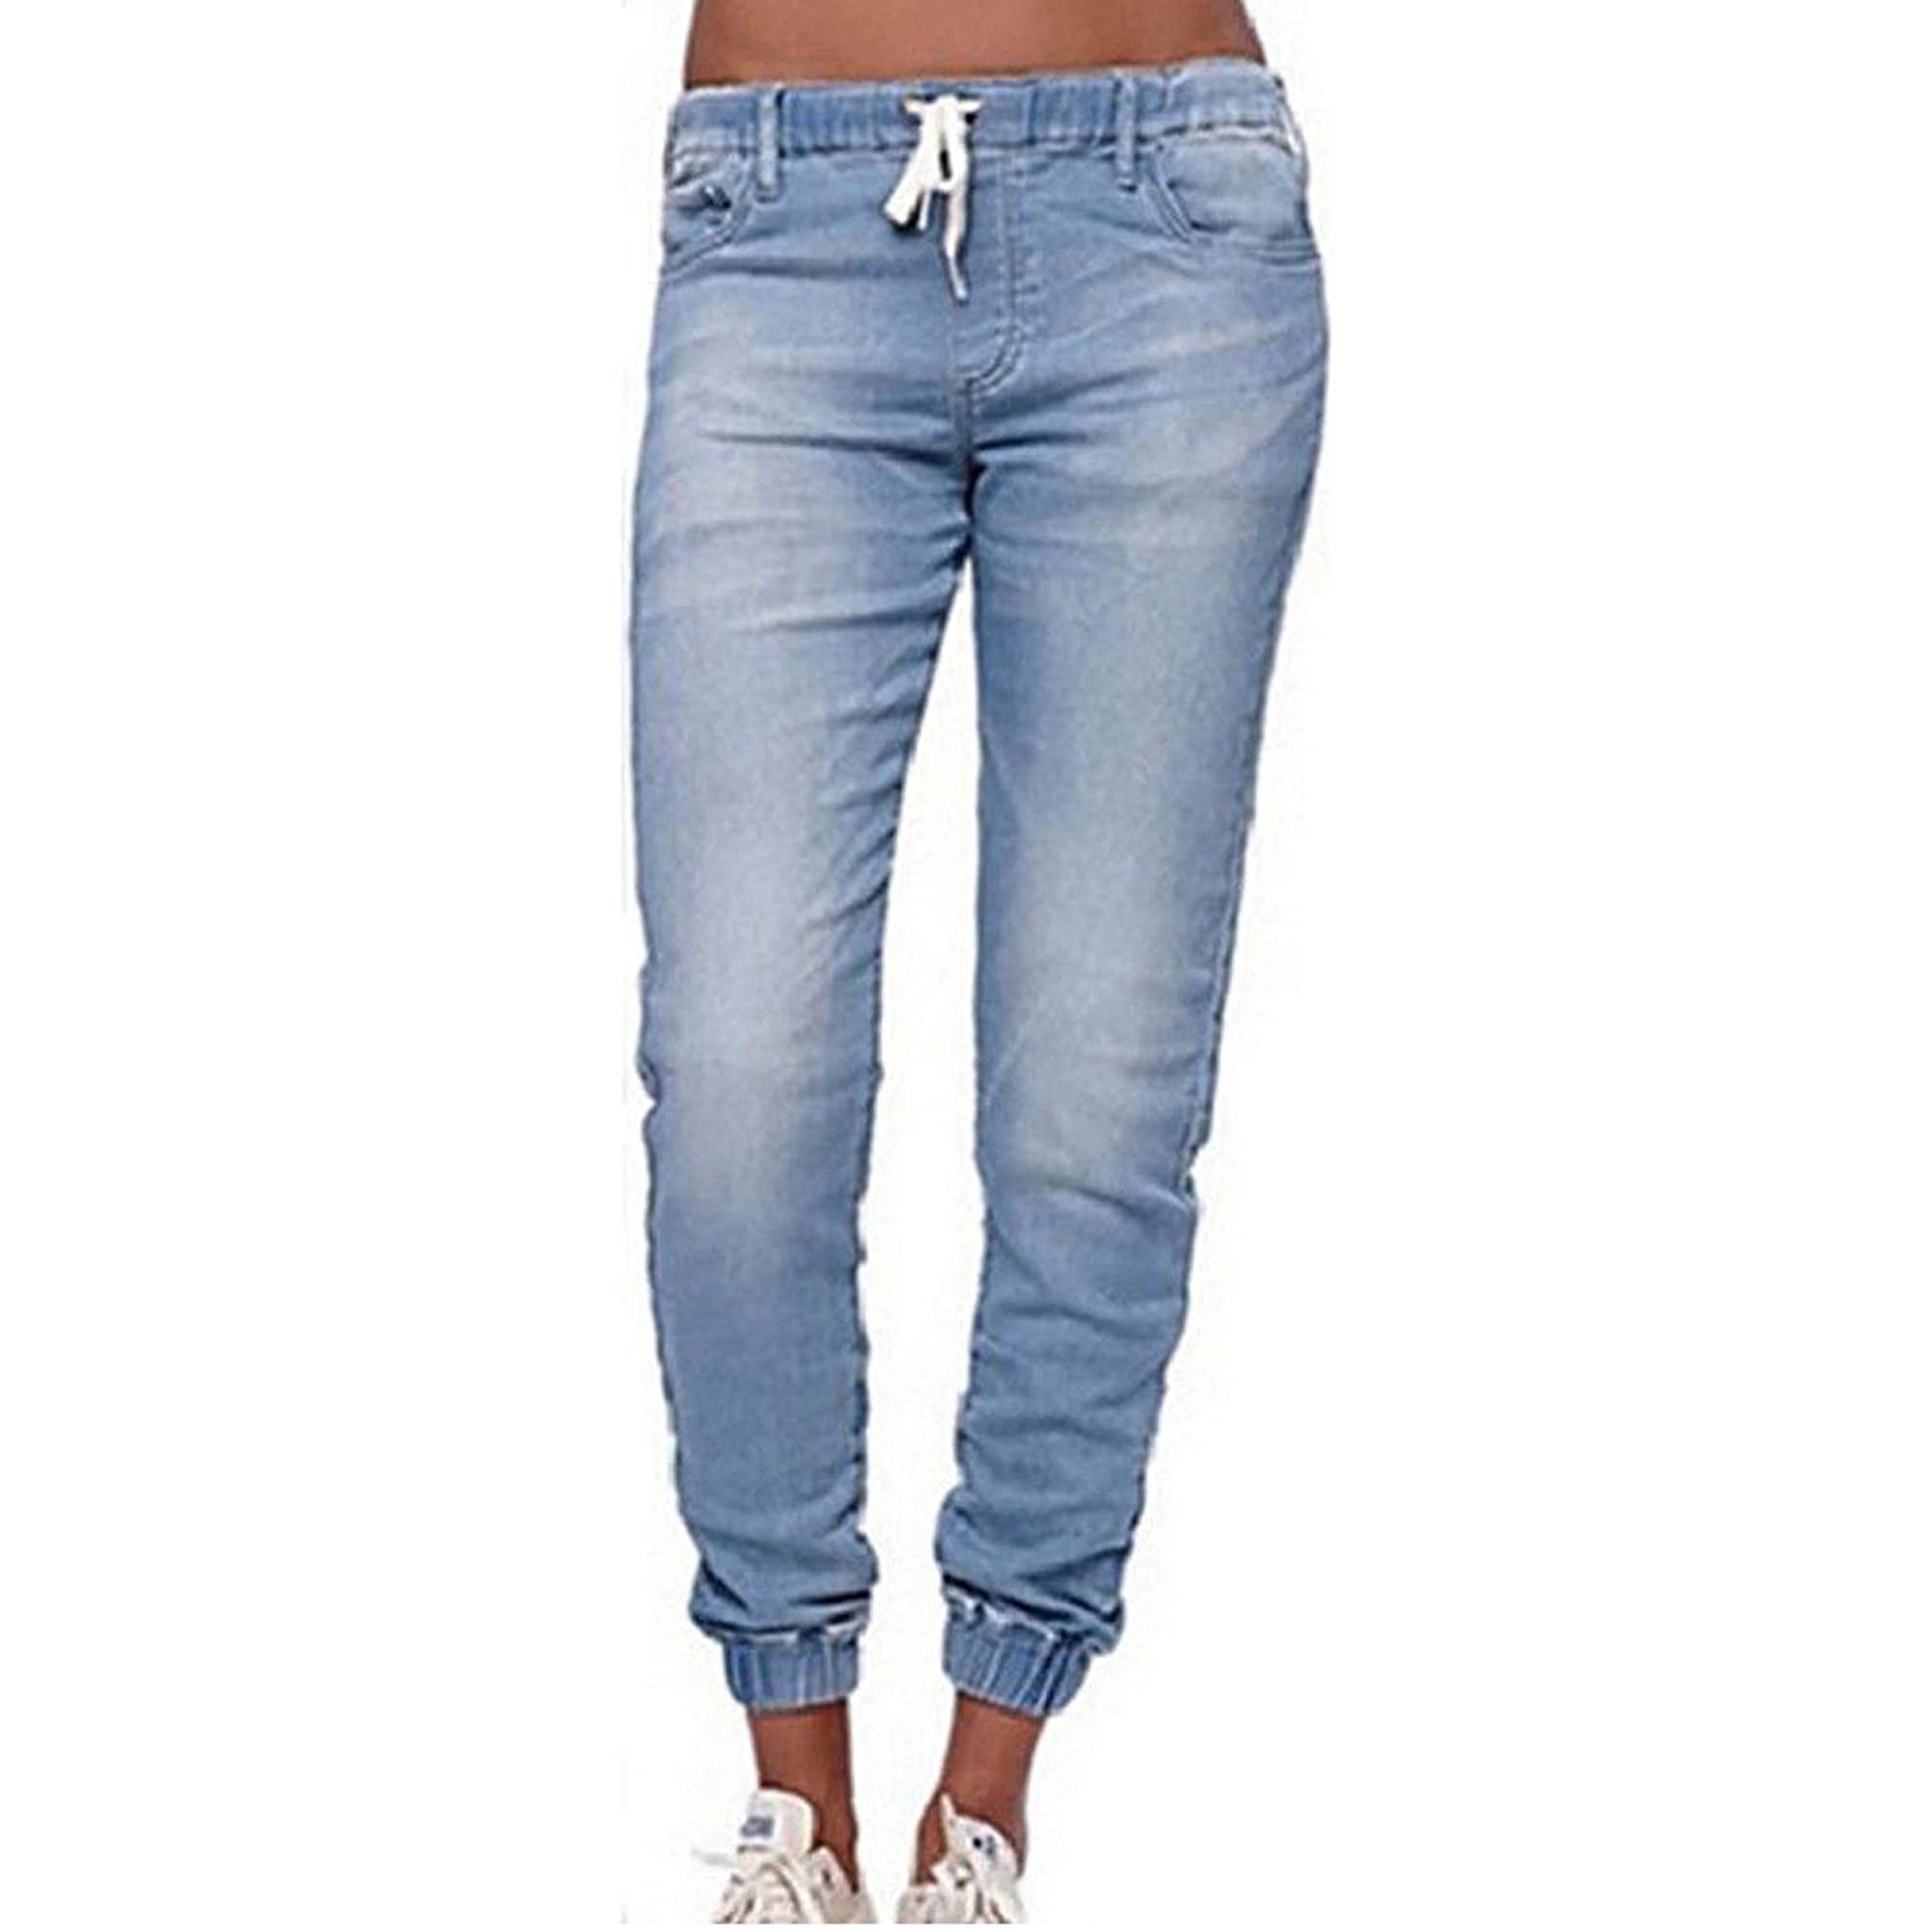 Womens Elastic Waist Pencil Stretch Denim Skinny Drawstring Jeans Pants Trousers - image 1 of 5